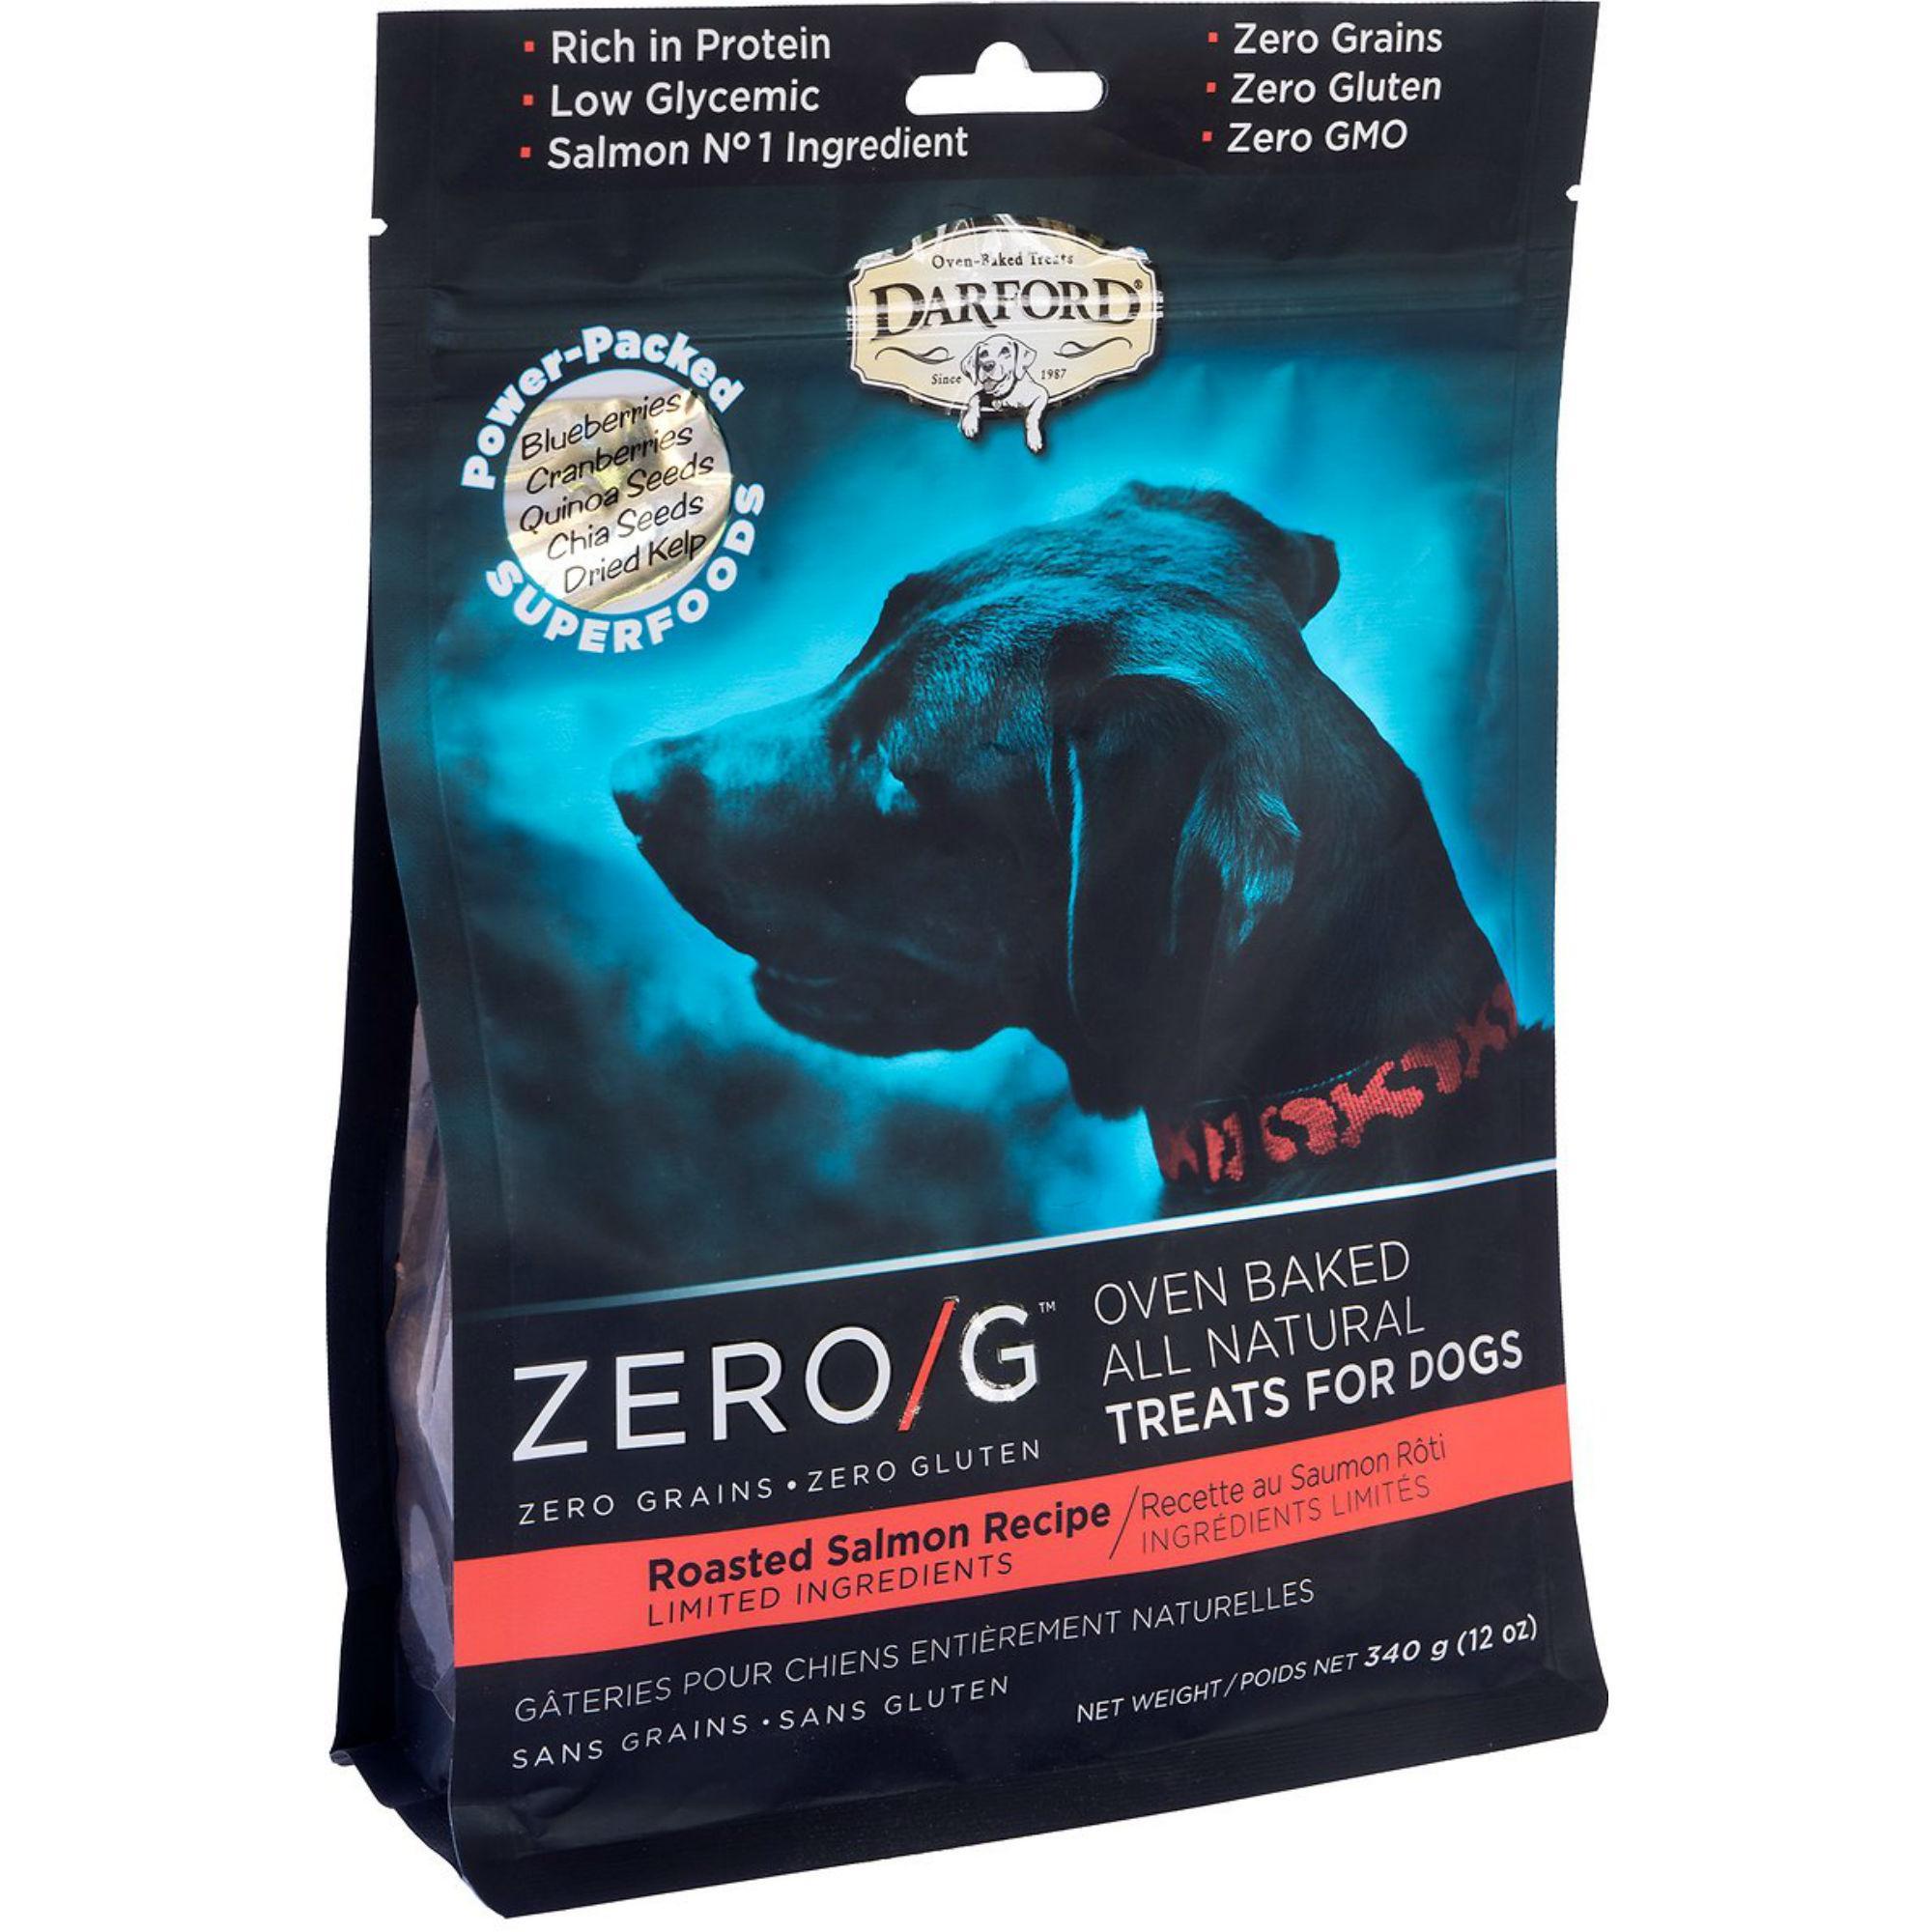 Darford Zero/G Natural Dog Treats - Salmon